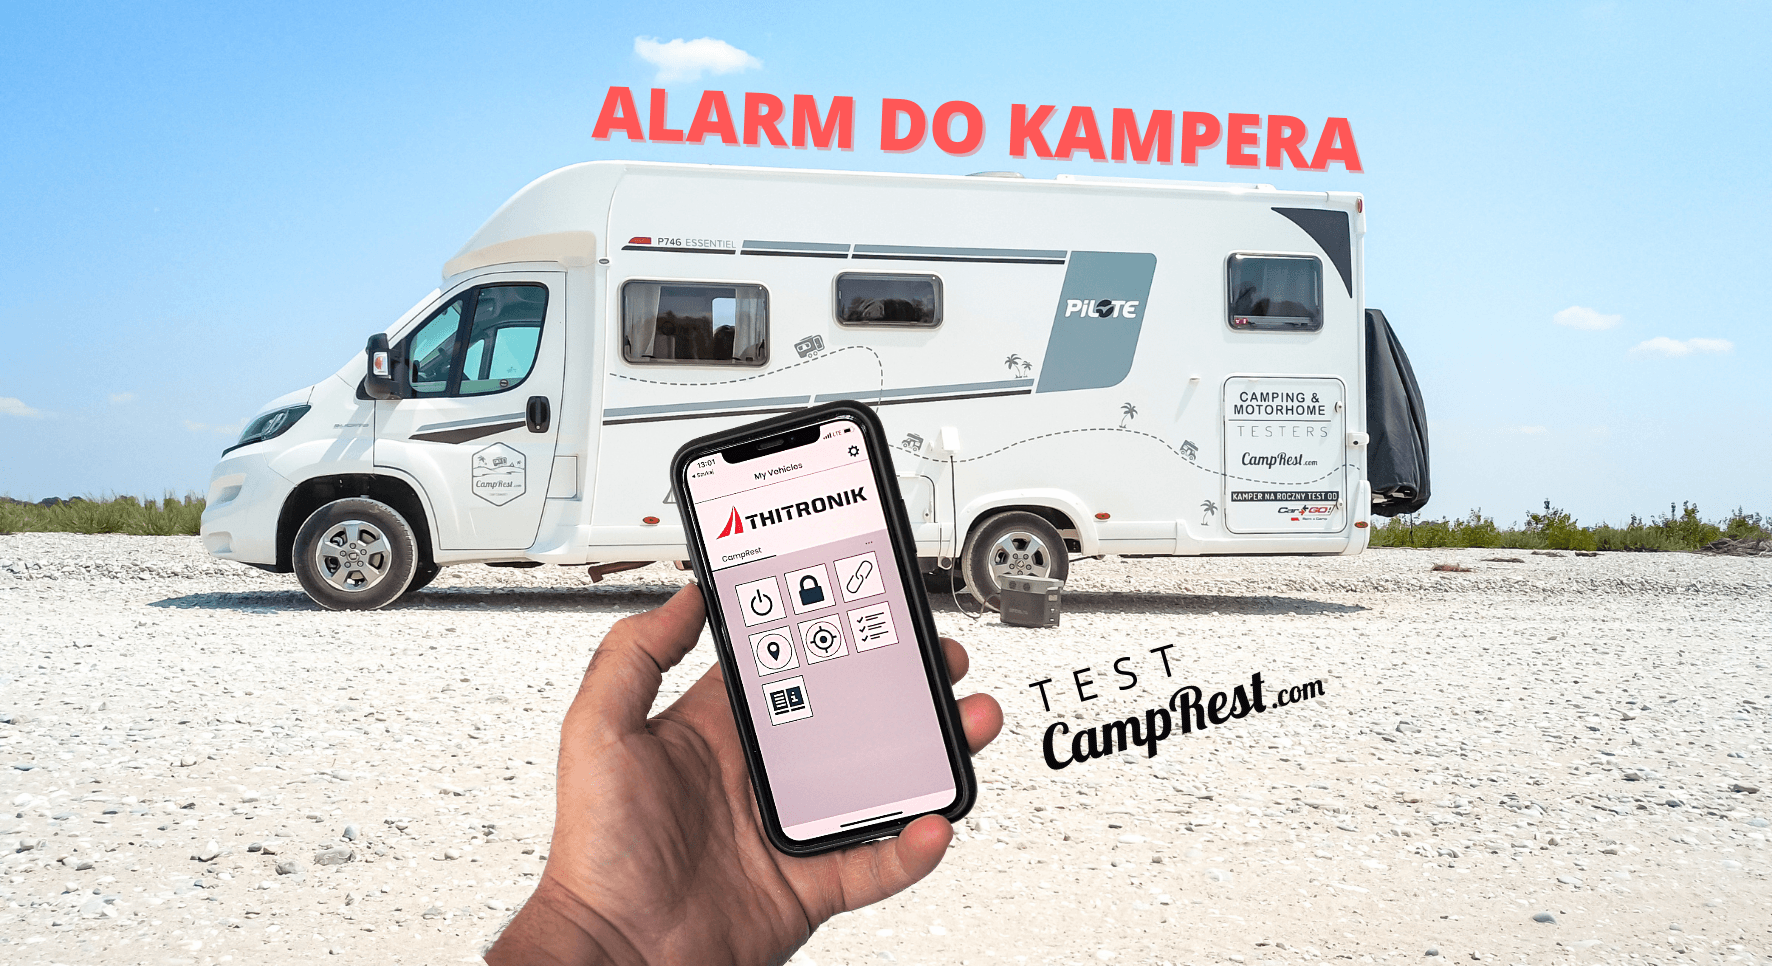 The most advanced motorhome alarm - TEST CampRest – main image